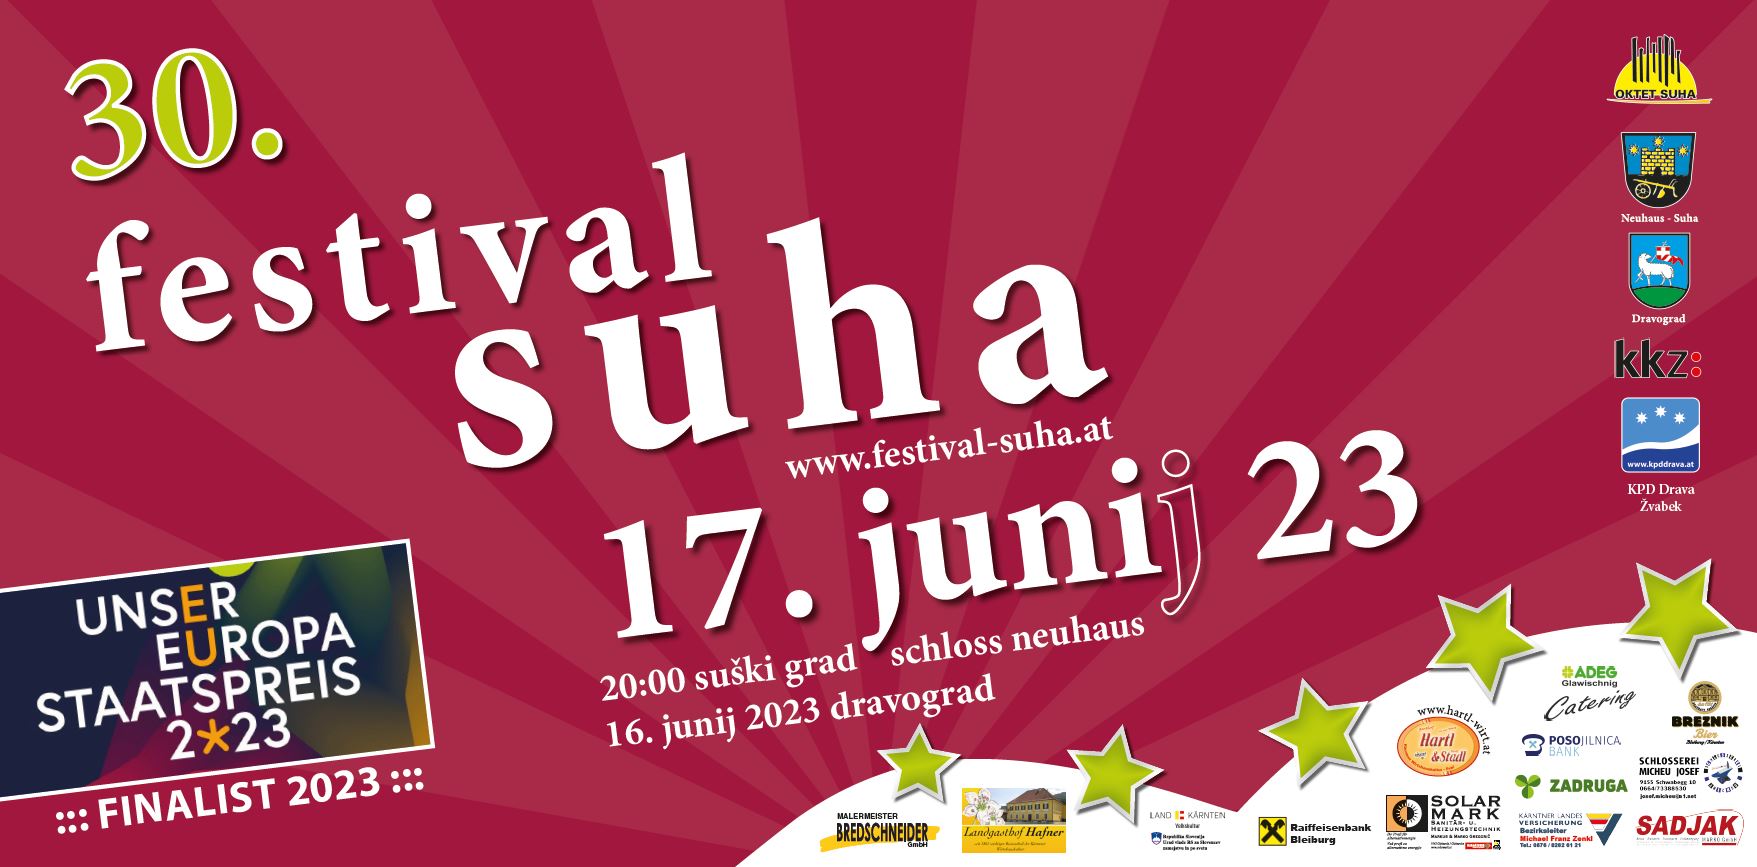 (c) Festival-suha.at